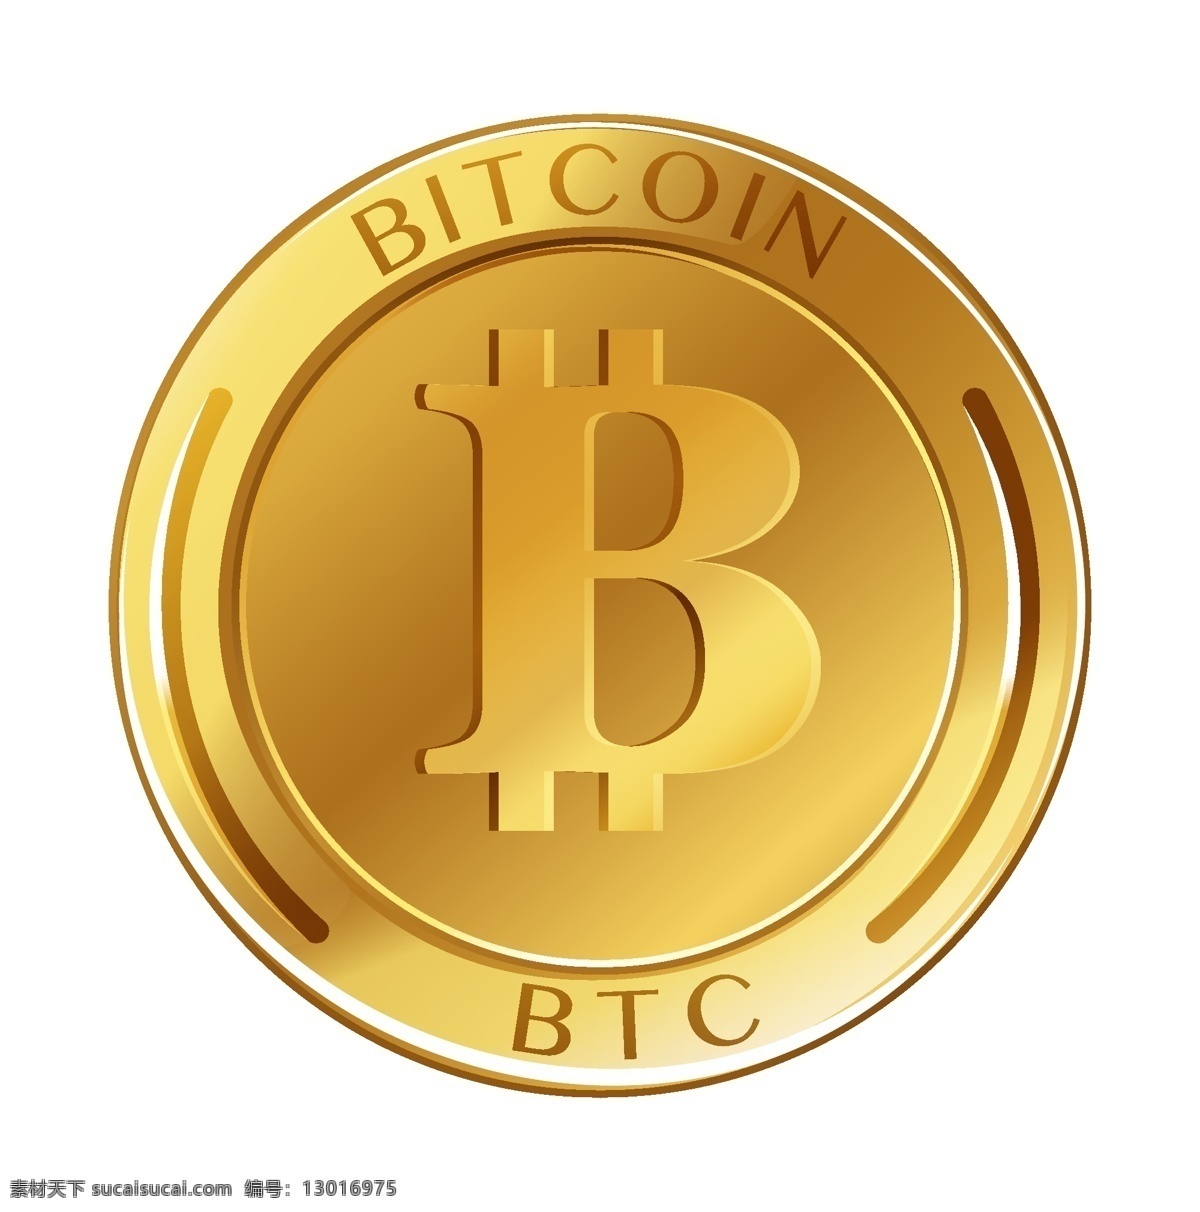 btc 比特 币 概念 图形 logo 模板 金色 金币 比特币 bitcoin logo模板